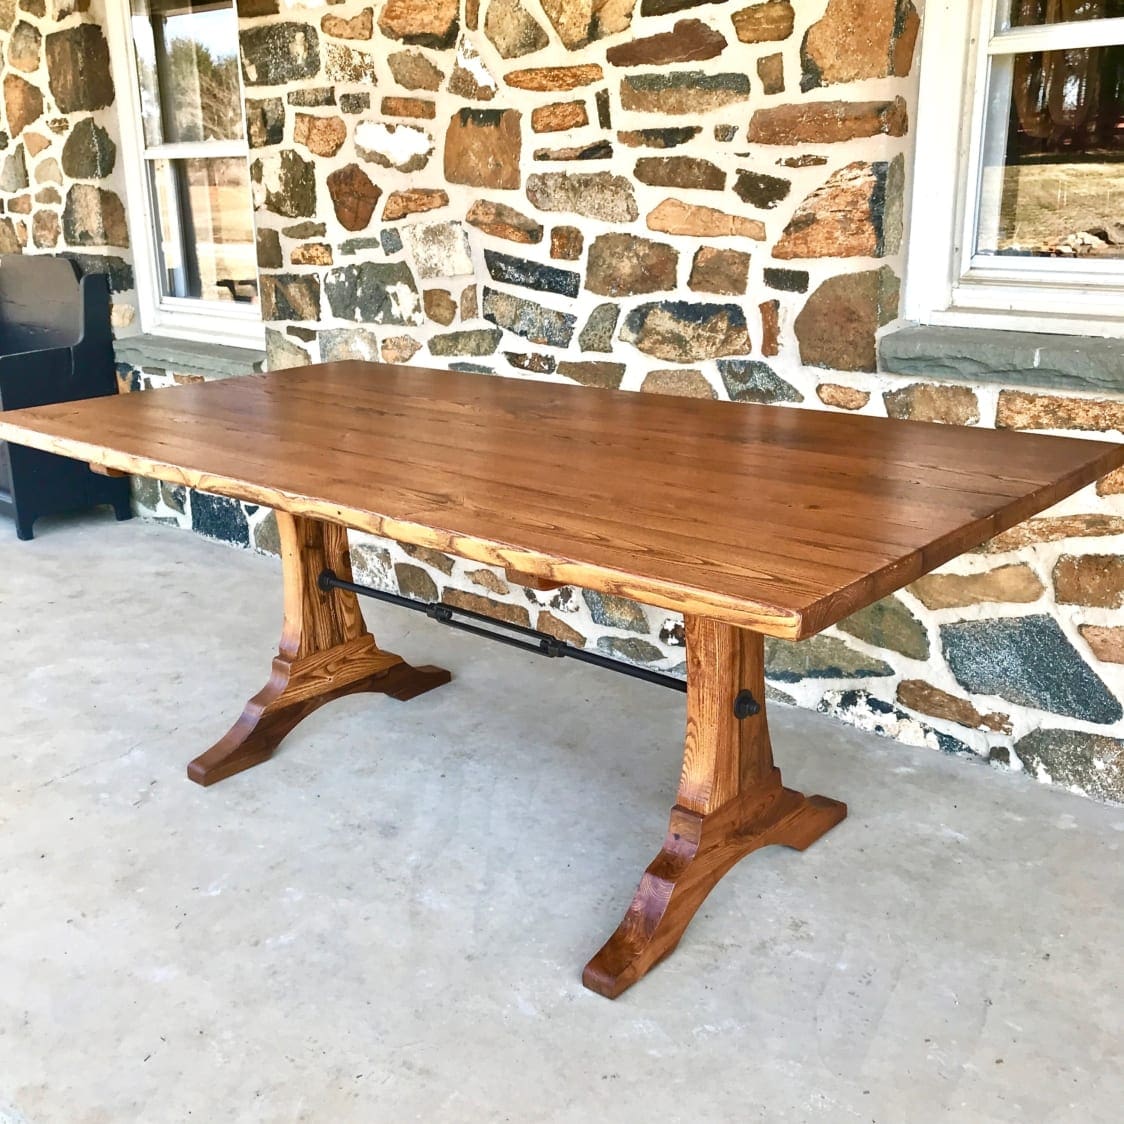 Trestle table, wood table